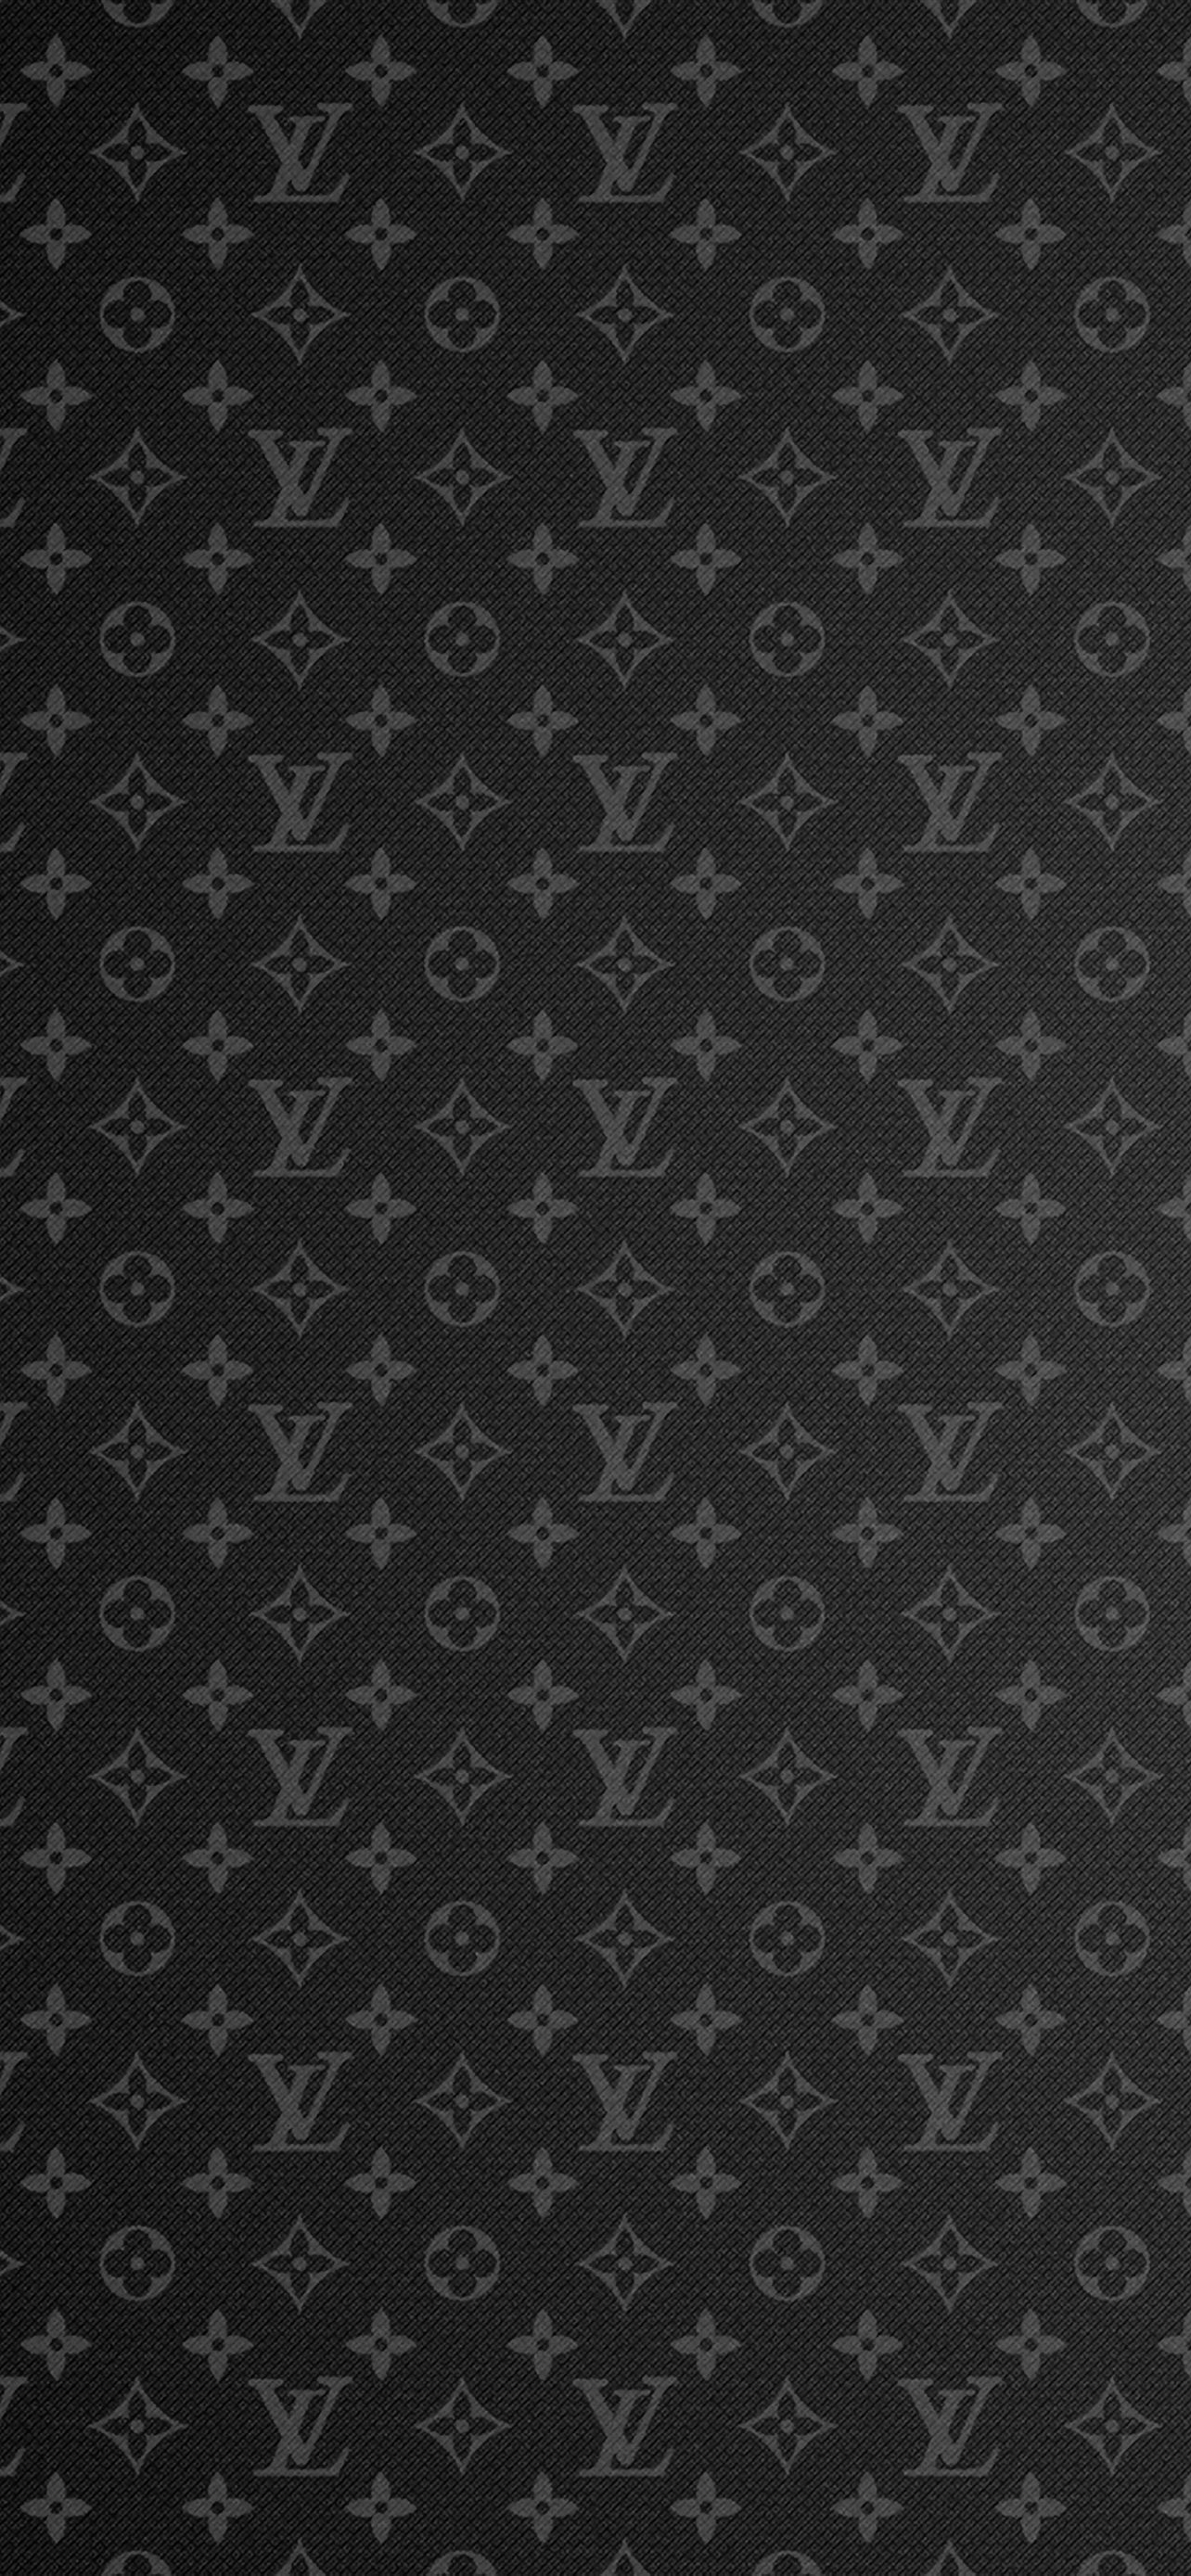 Louis Vuitton rose wallpaper iPhone 6s Plus  New wallpaper iphone, Louis  vuitton iphone wallpaper, Gold wallpaper iphone